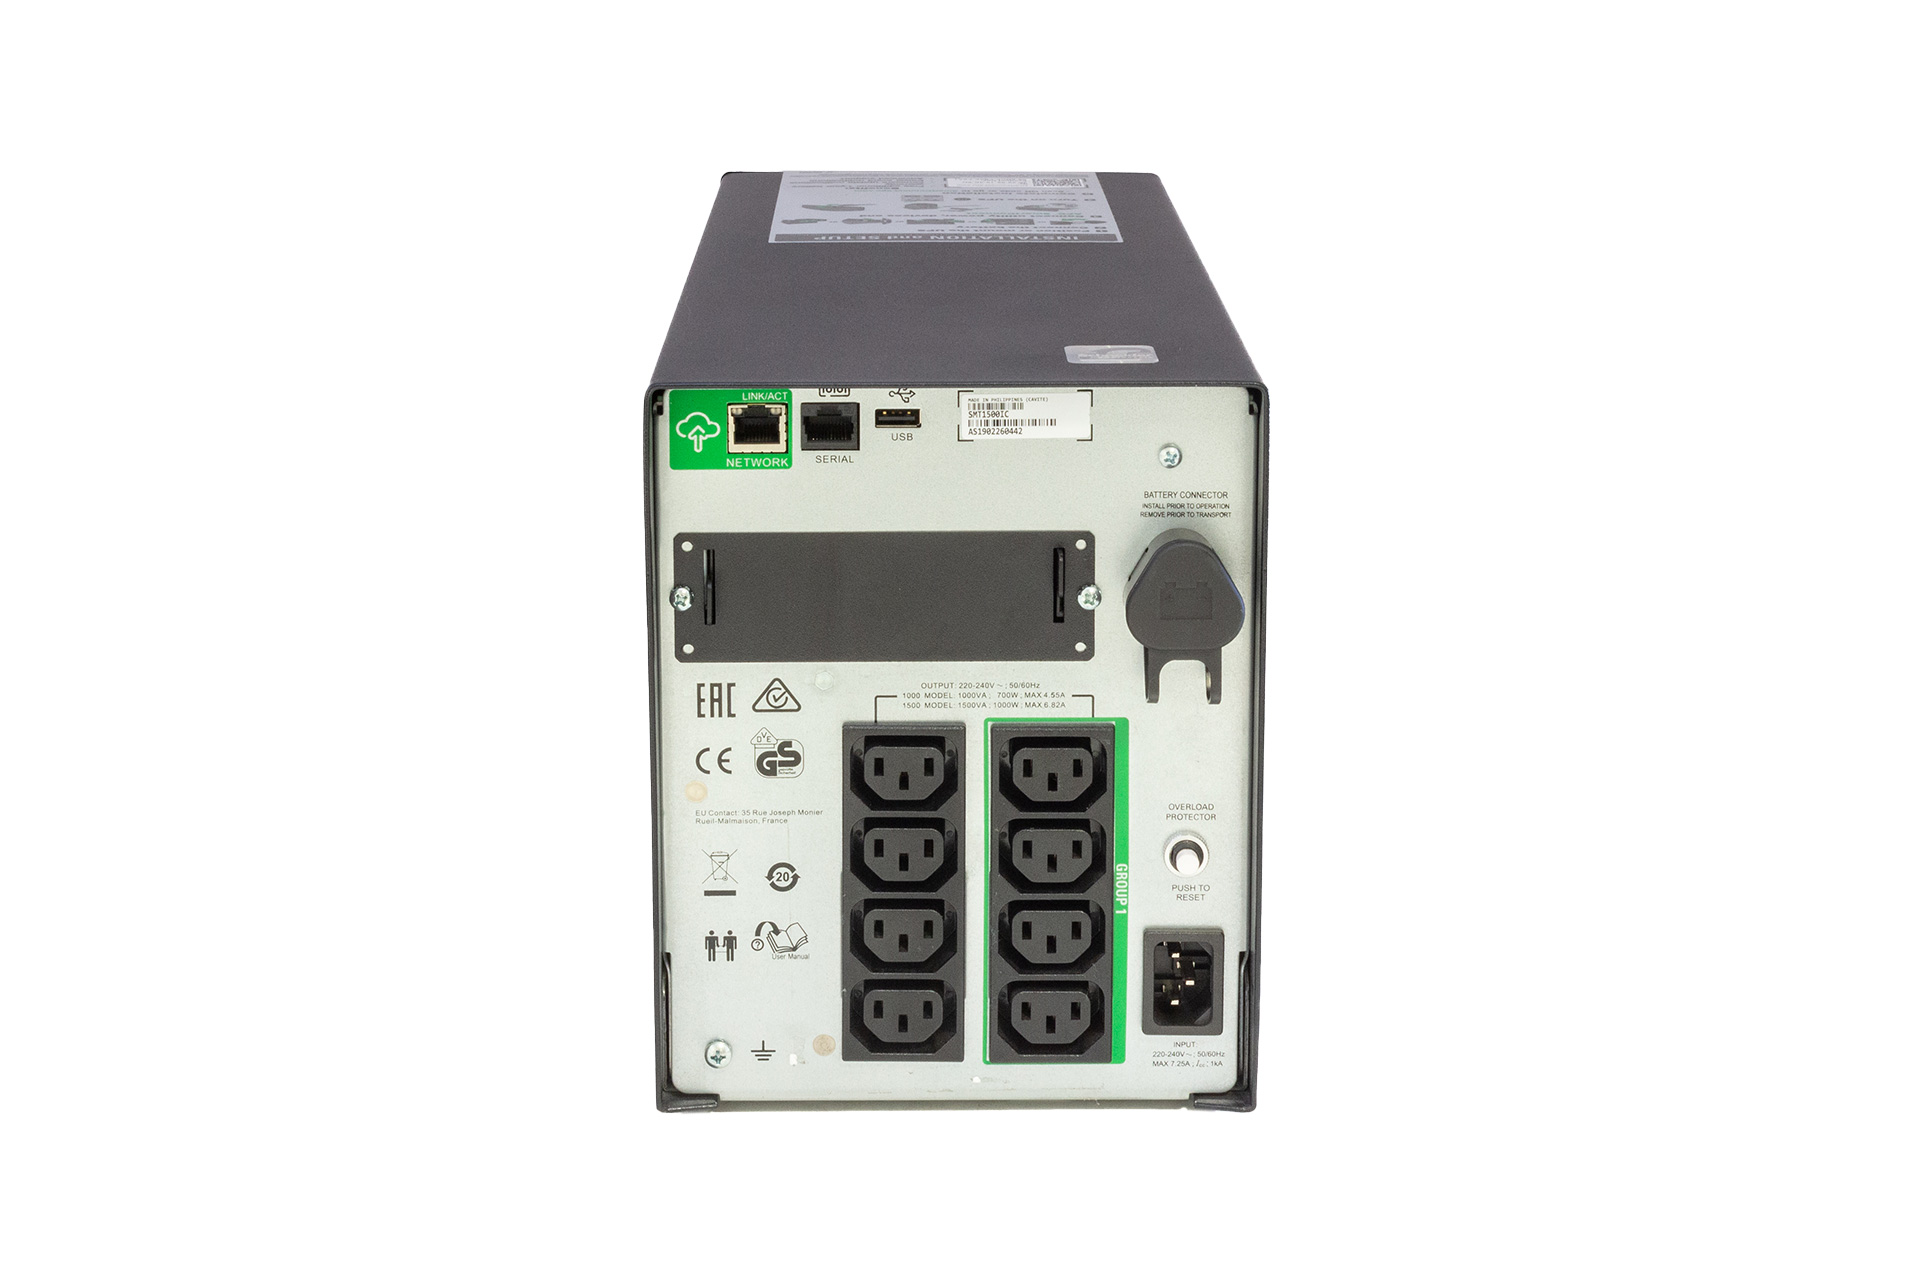 APC Smart UPS T1500, USV 230V 1500VA, Tower, 8x C13, SmartConnect, LCD, noBattery